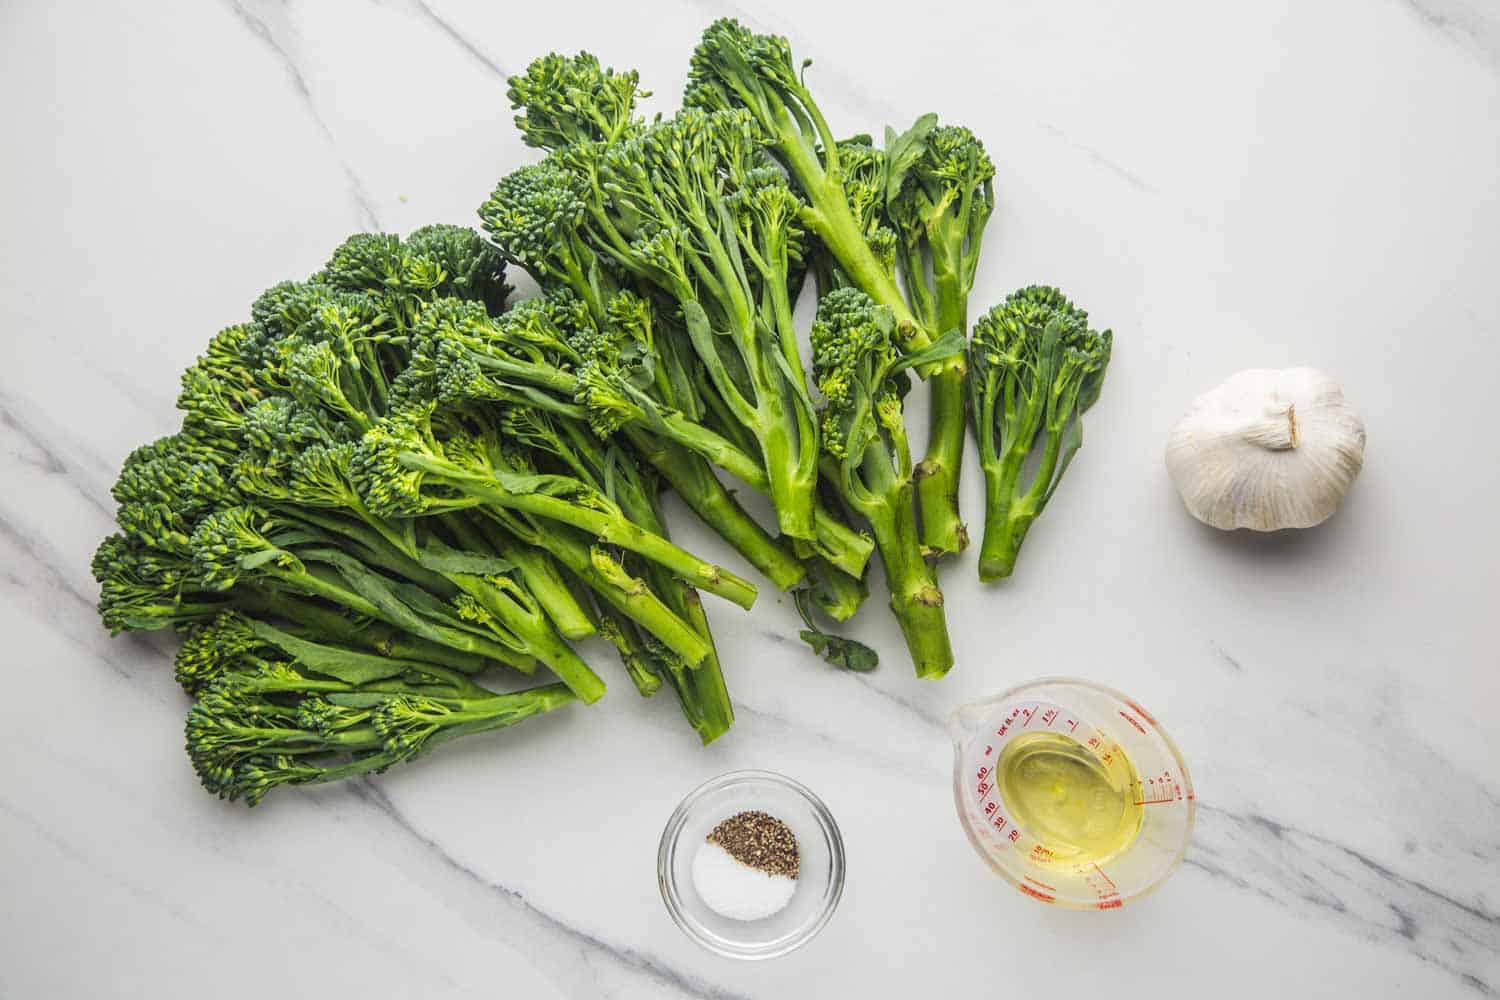 Roasted Broccolini Ingredients including broccolini, garlic, olive oil, salt & pepper.